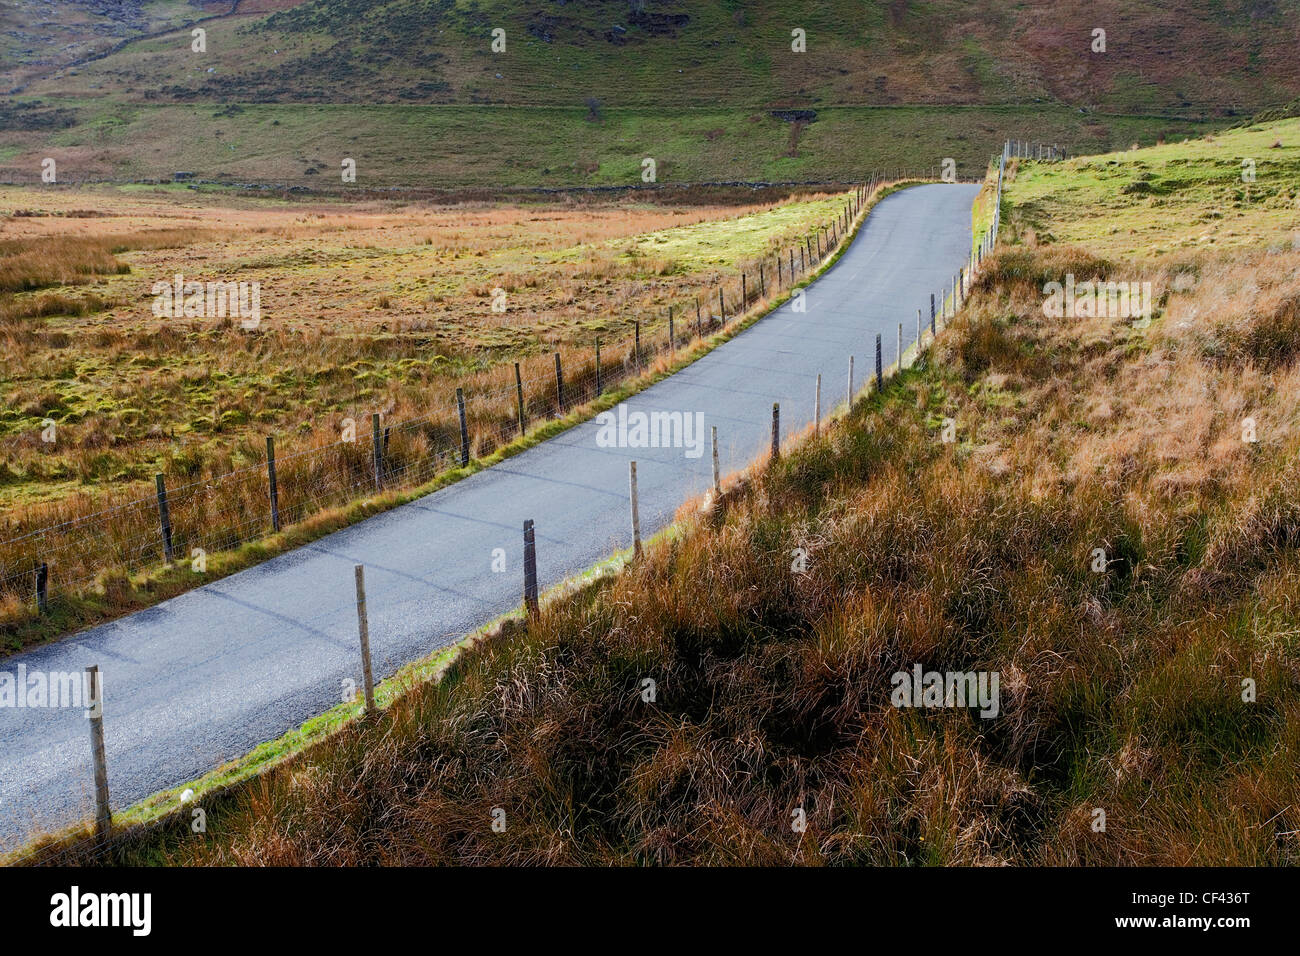 A small road running through the mountainous Snowdonia landscape. Stock Photo